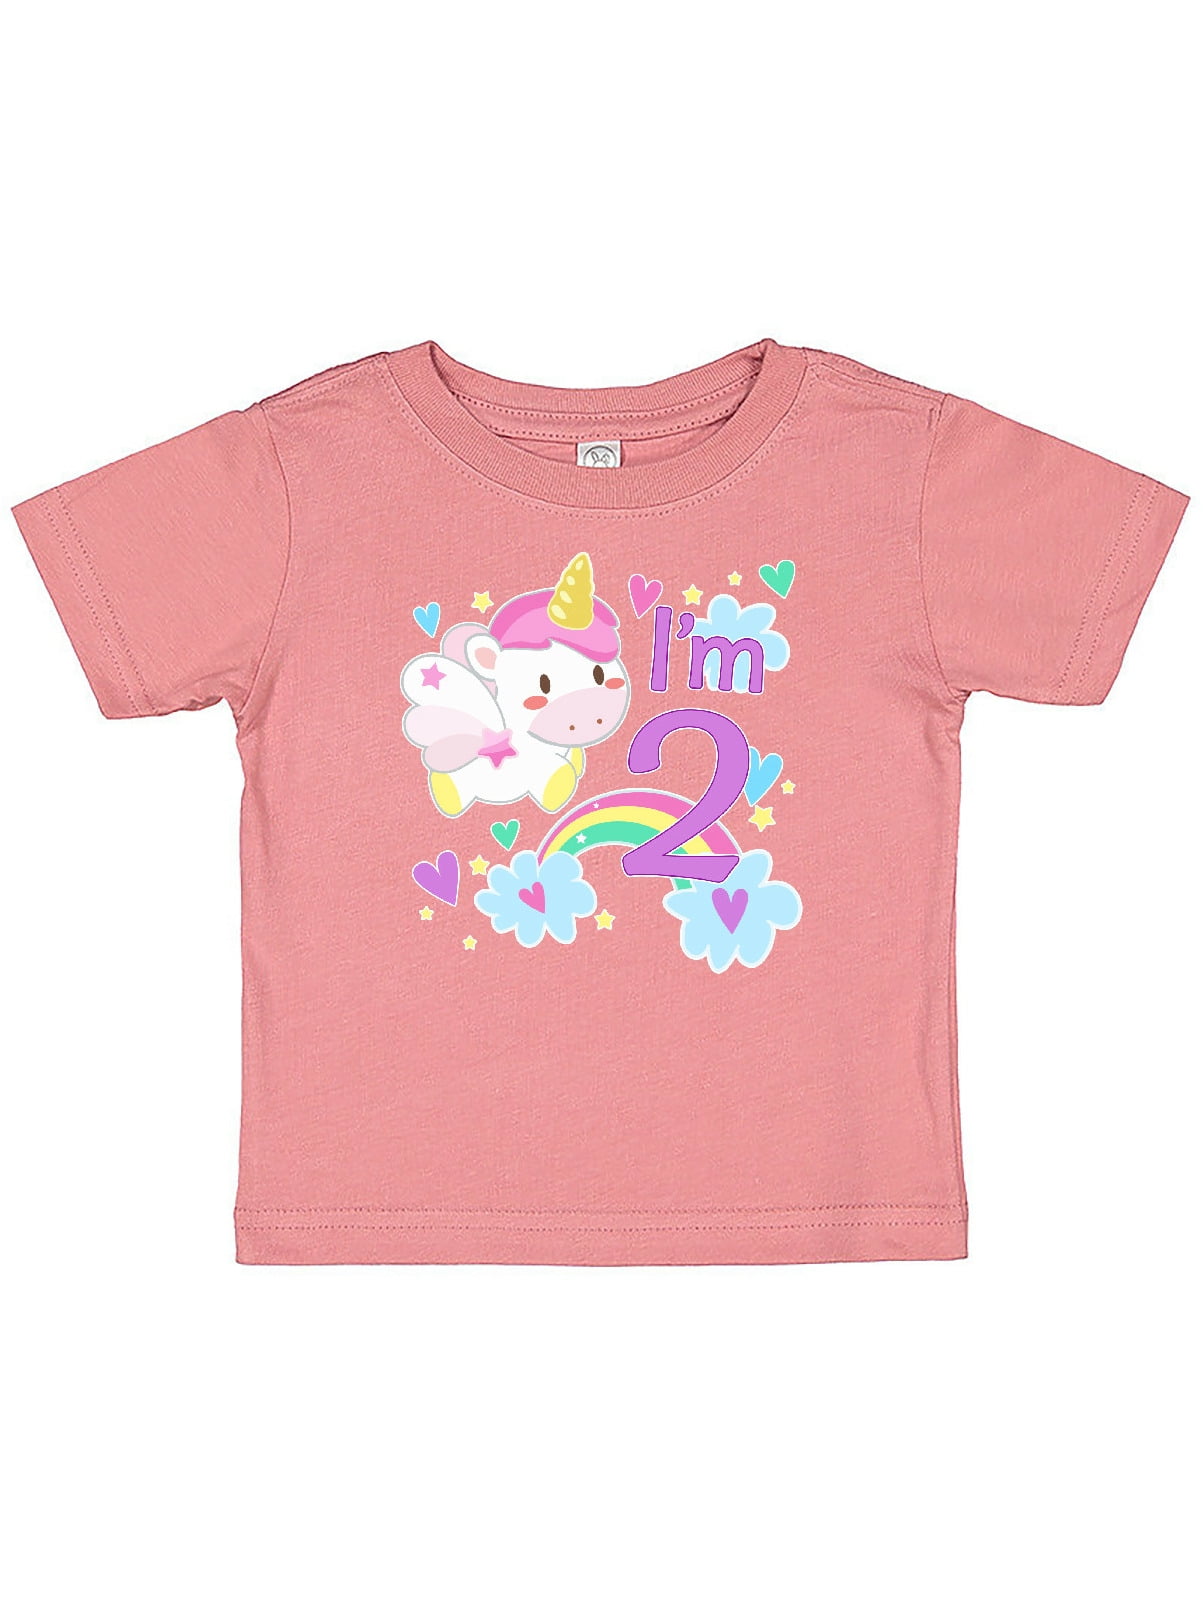 Cute Unicorn 2nd Birthday Baby T-Shirt inktastic Im Two 